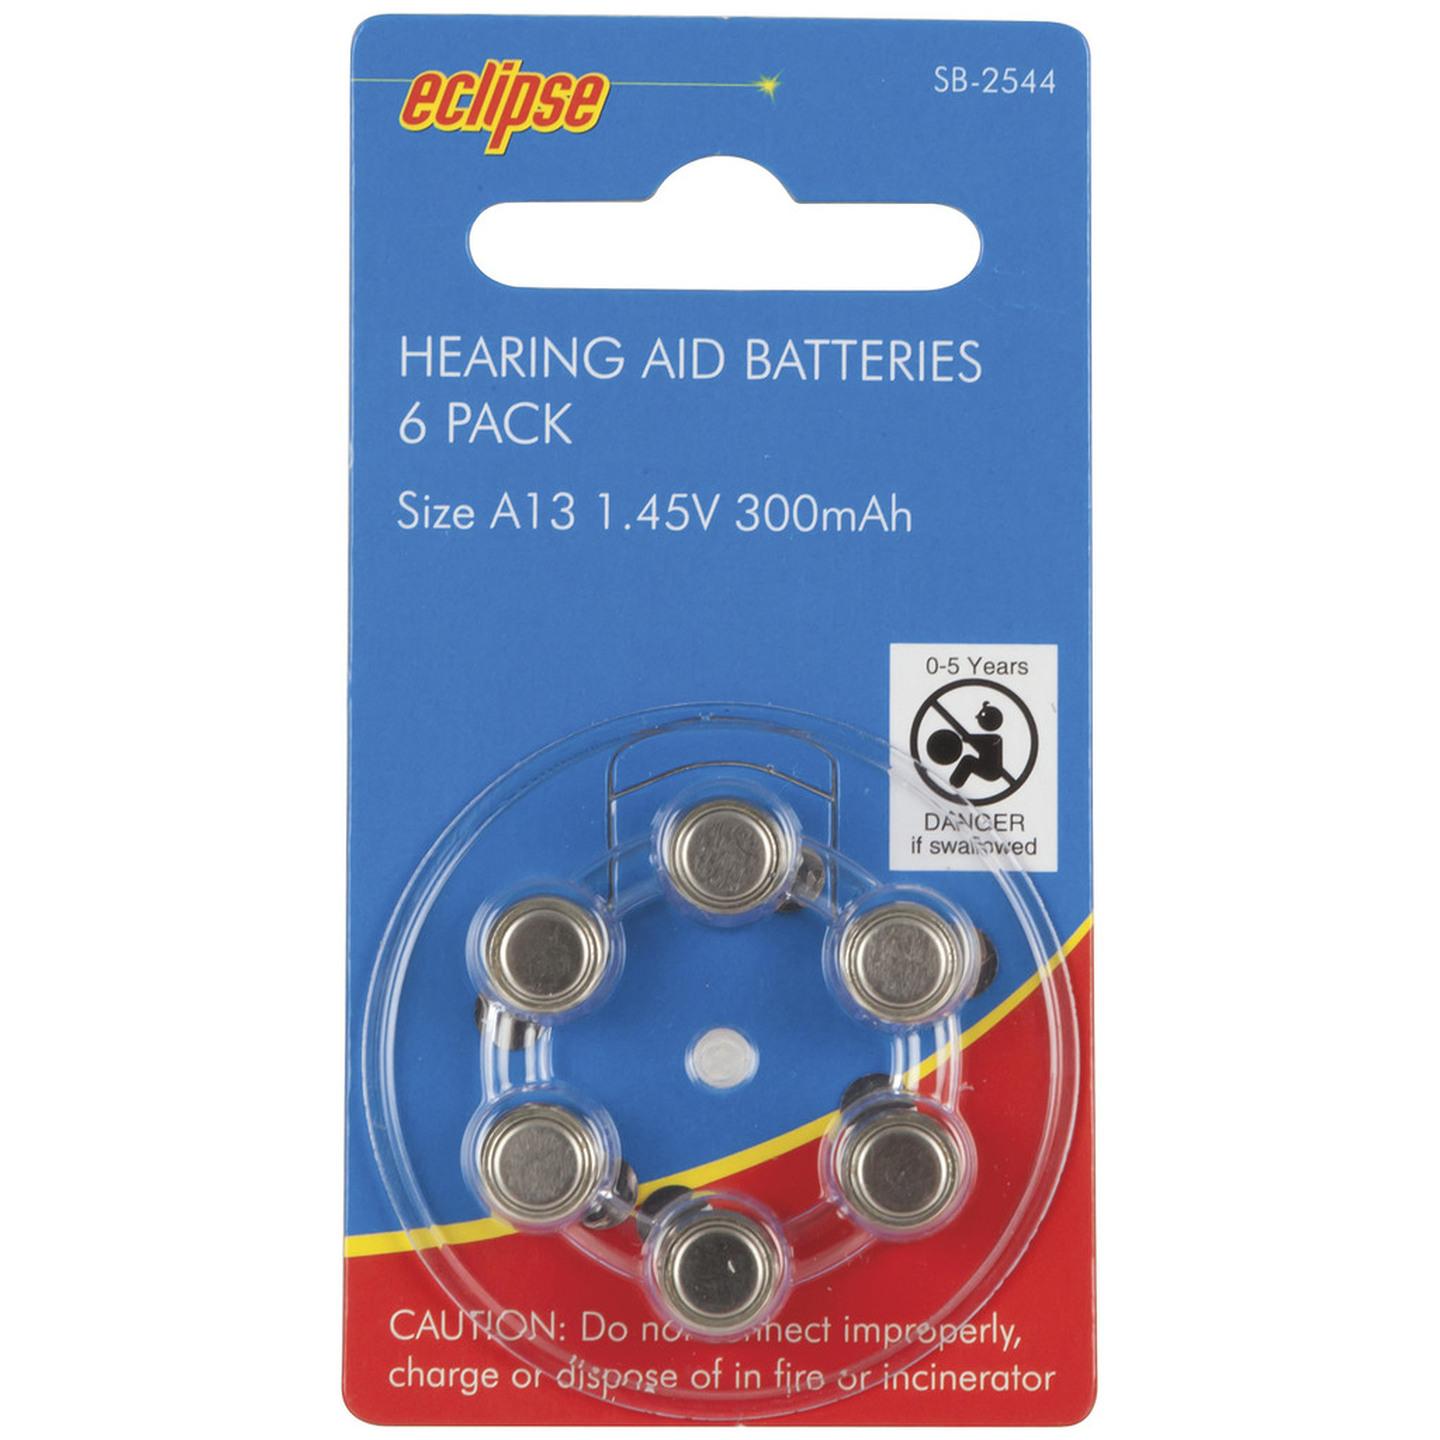 Hearing Aid Batteries A13 300mAh 6 pack